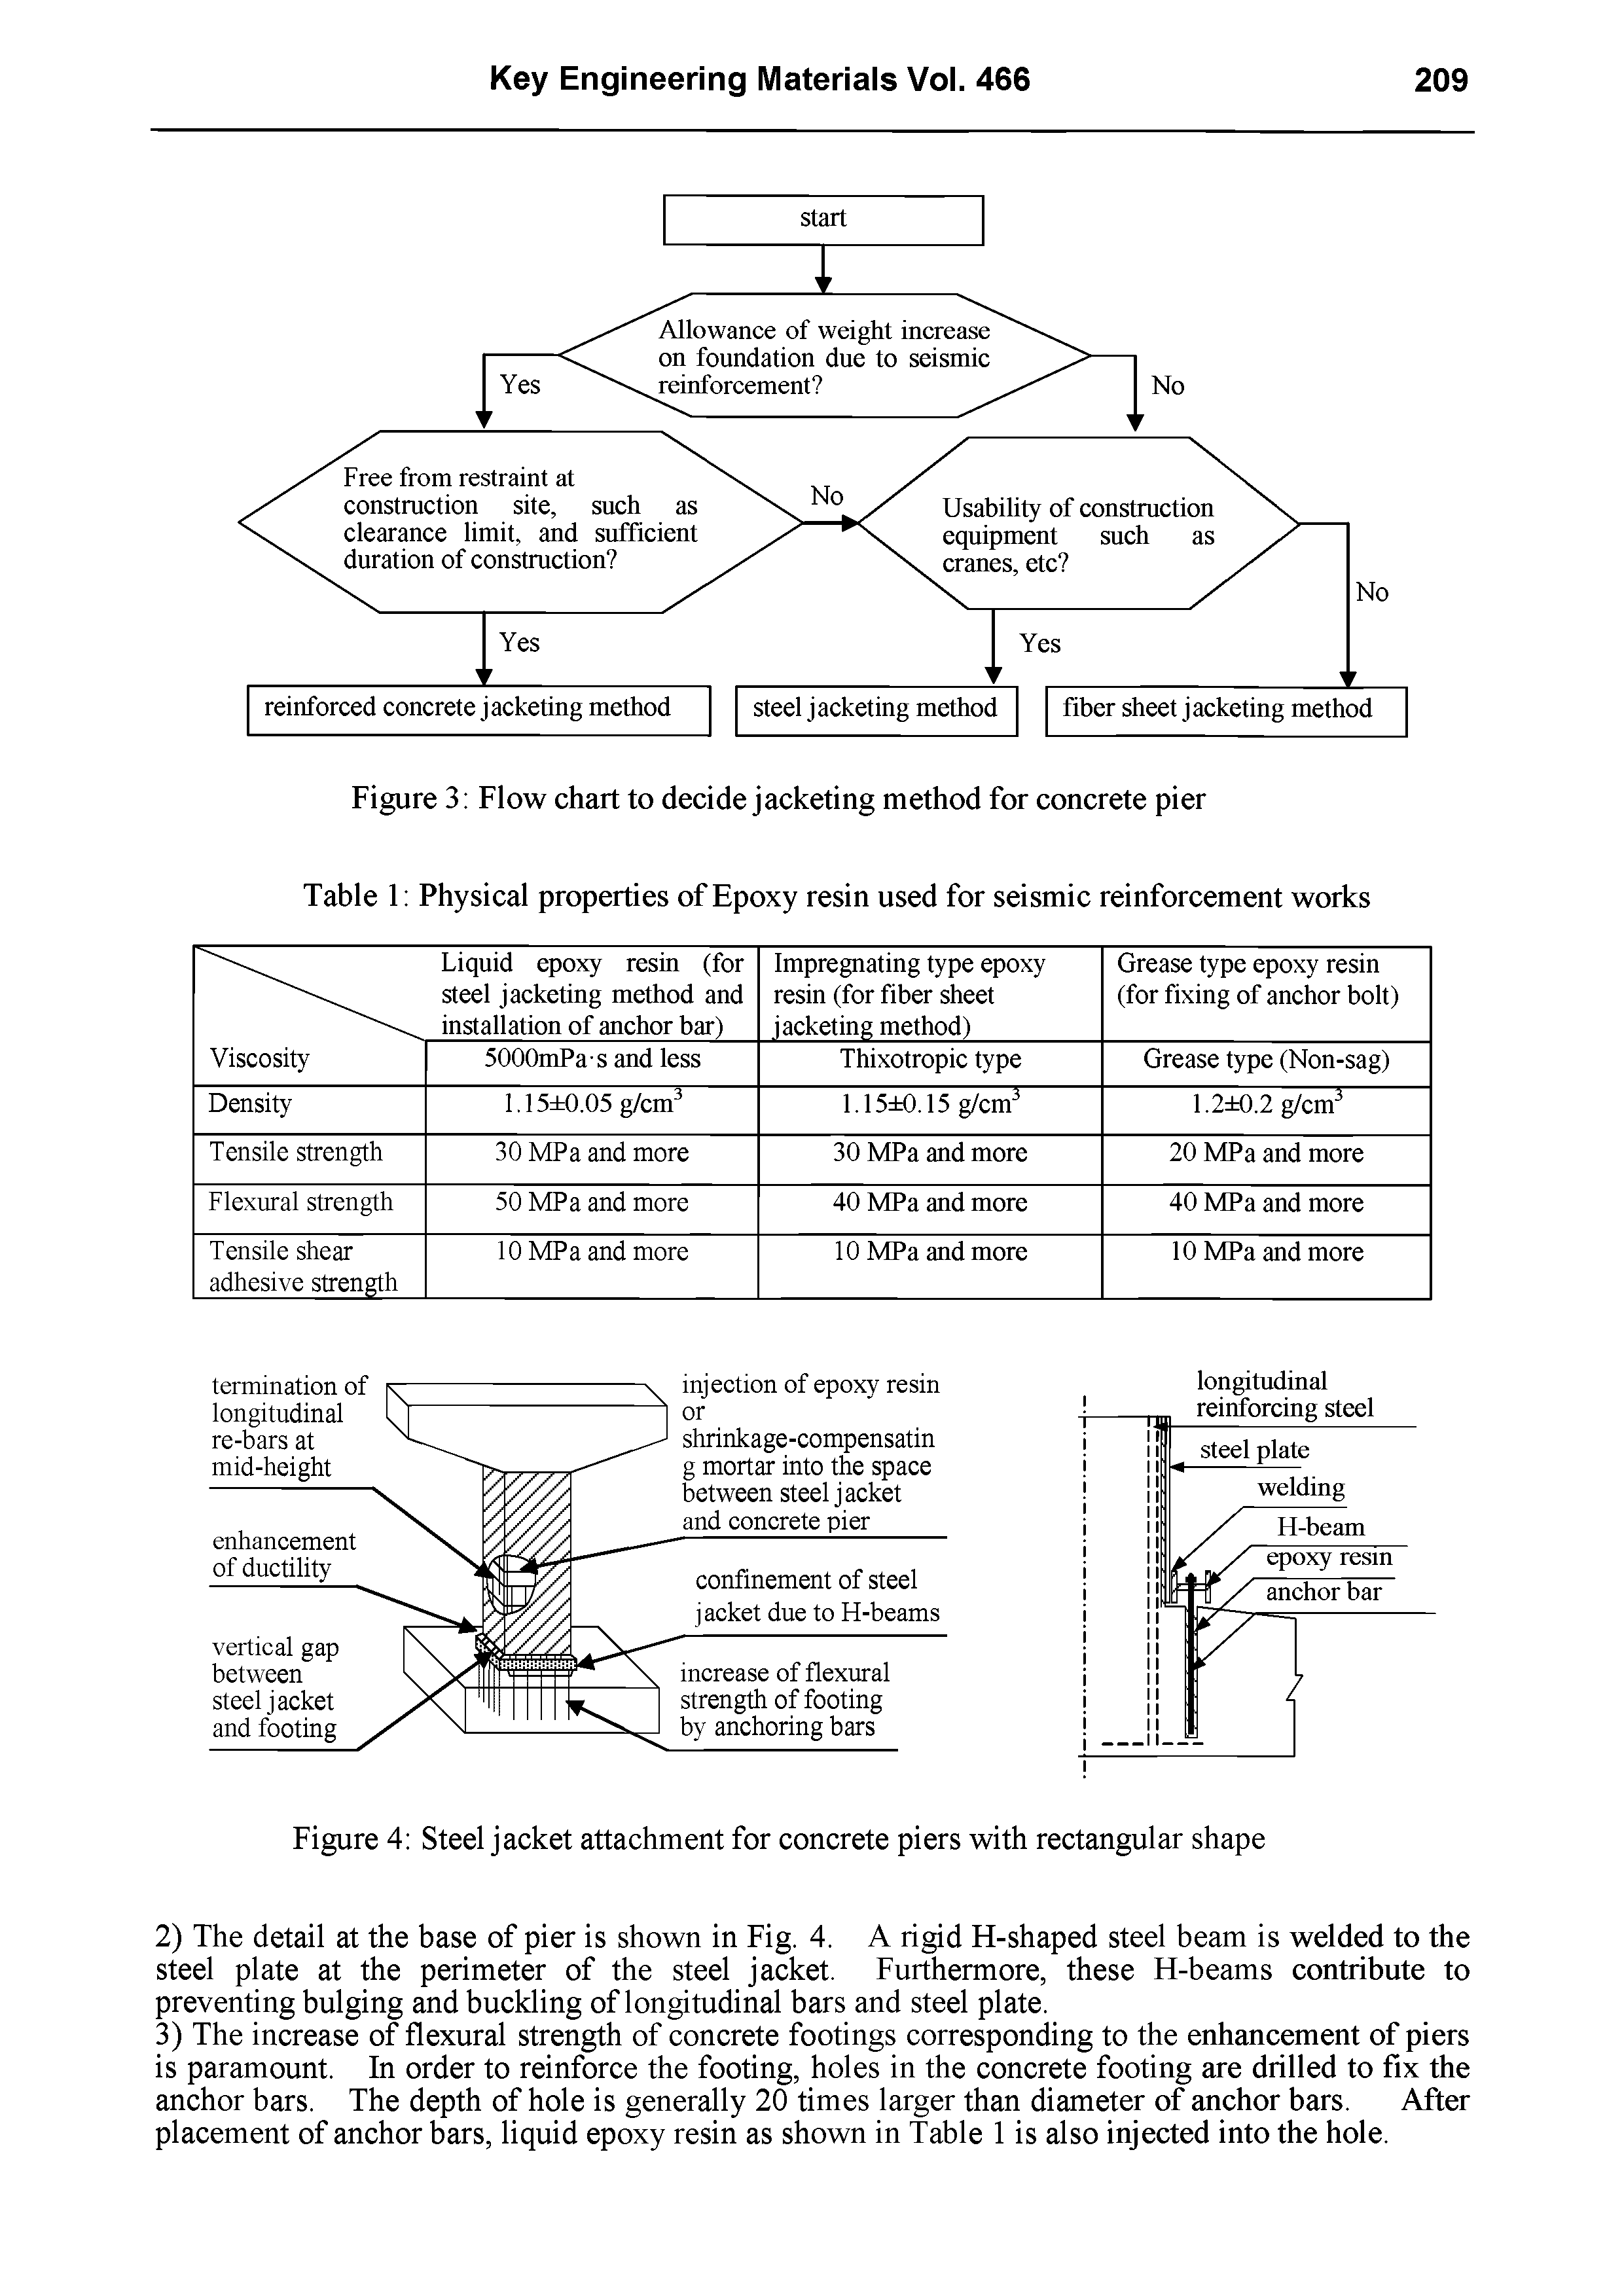 Figure 3 Flow chart to decide jacketing method for concrete pier...